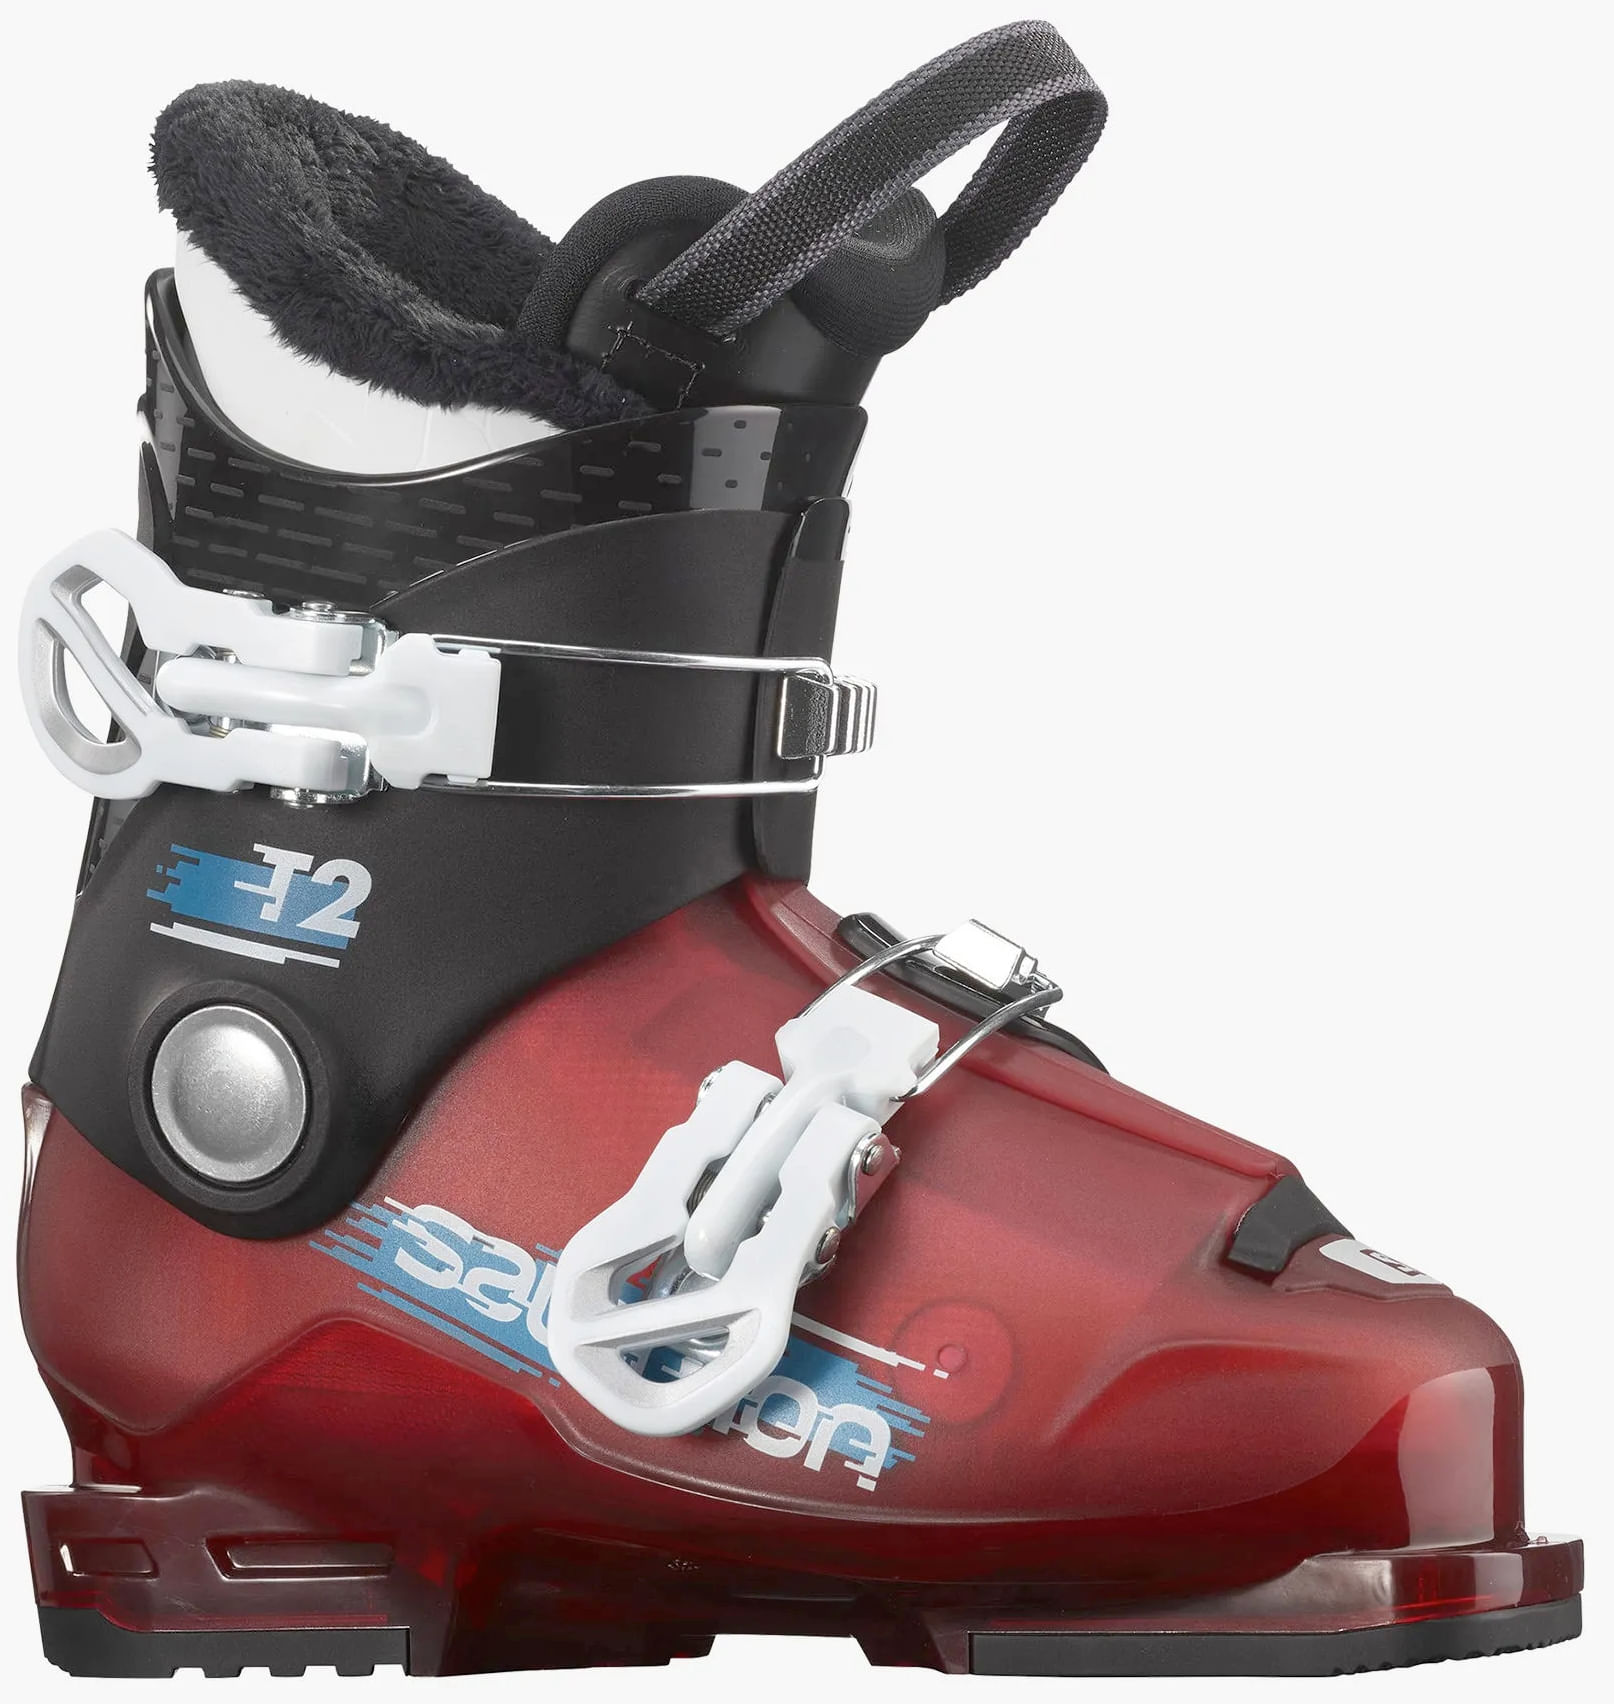 Mondo 19 Used Salomon T2 Kid's Ski Boots Size 1 